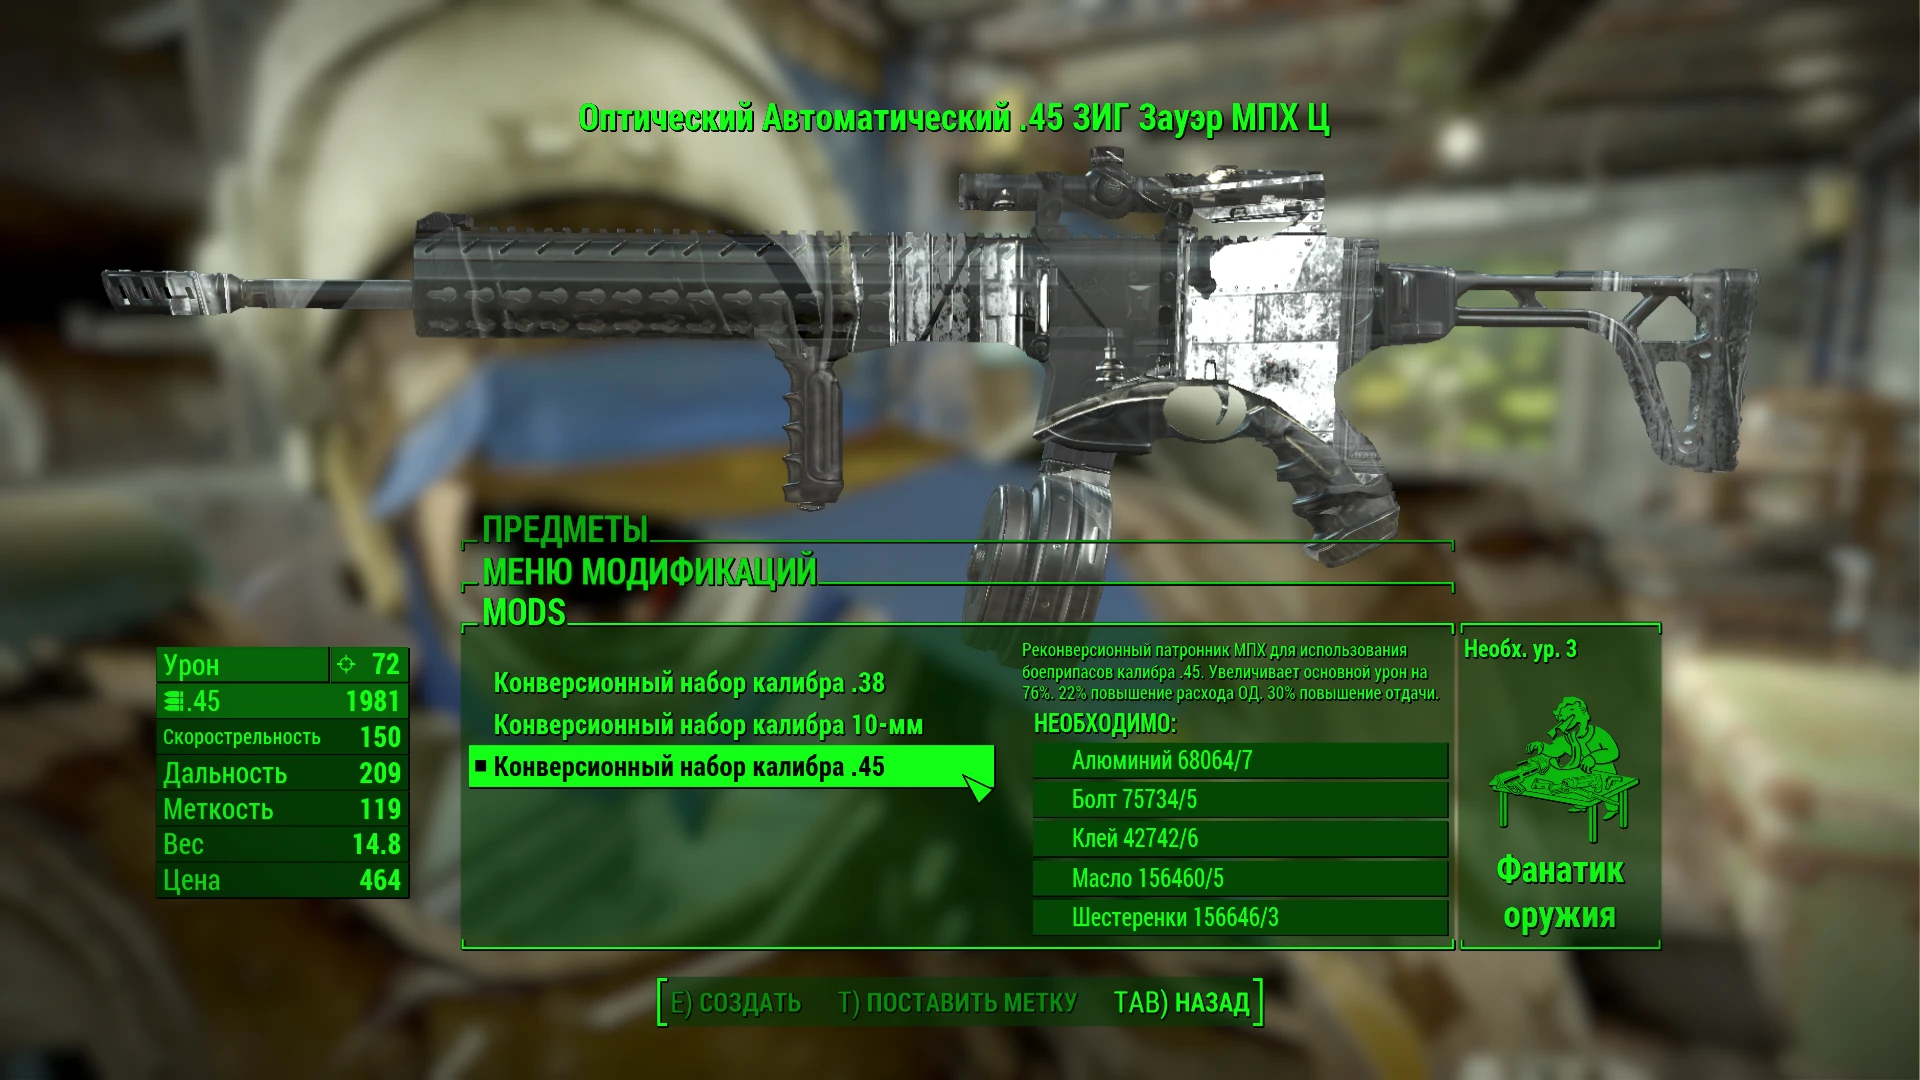 Fallout 4 как прокачать фанатик оружия (120) фото